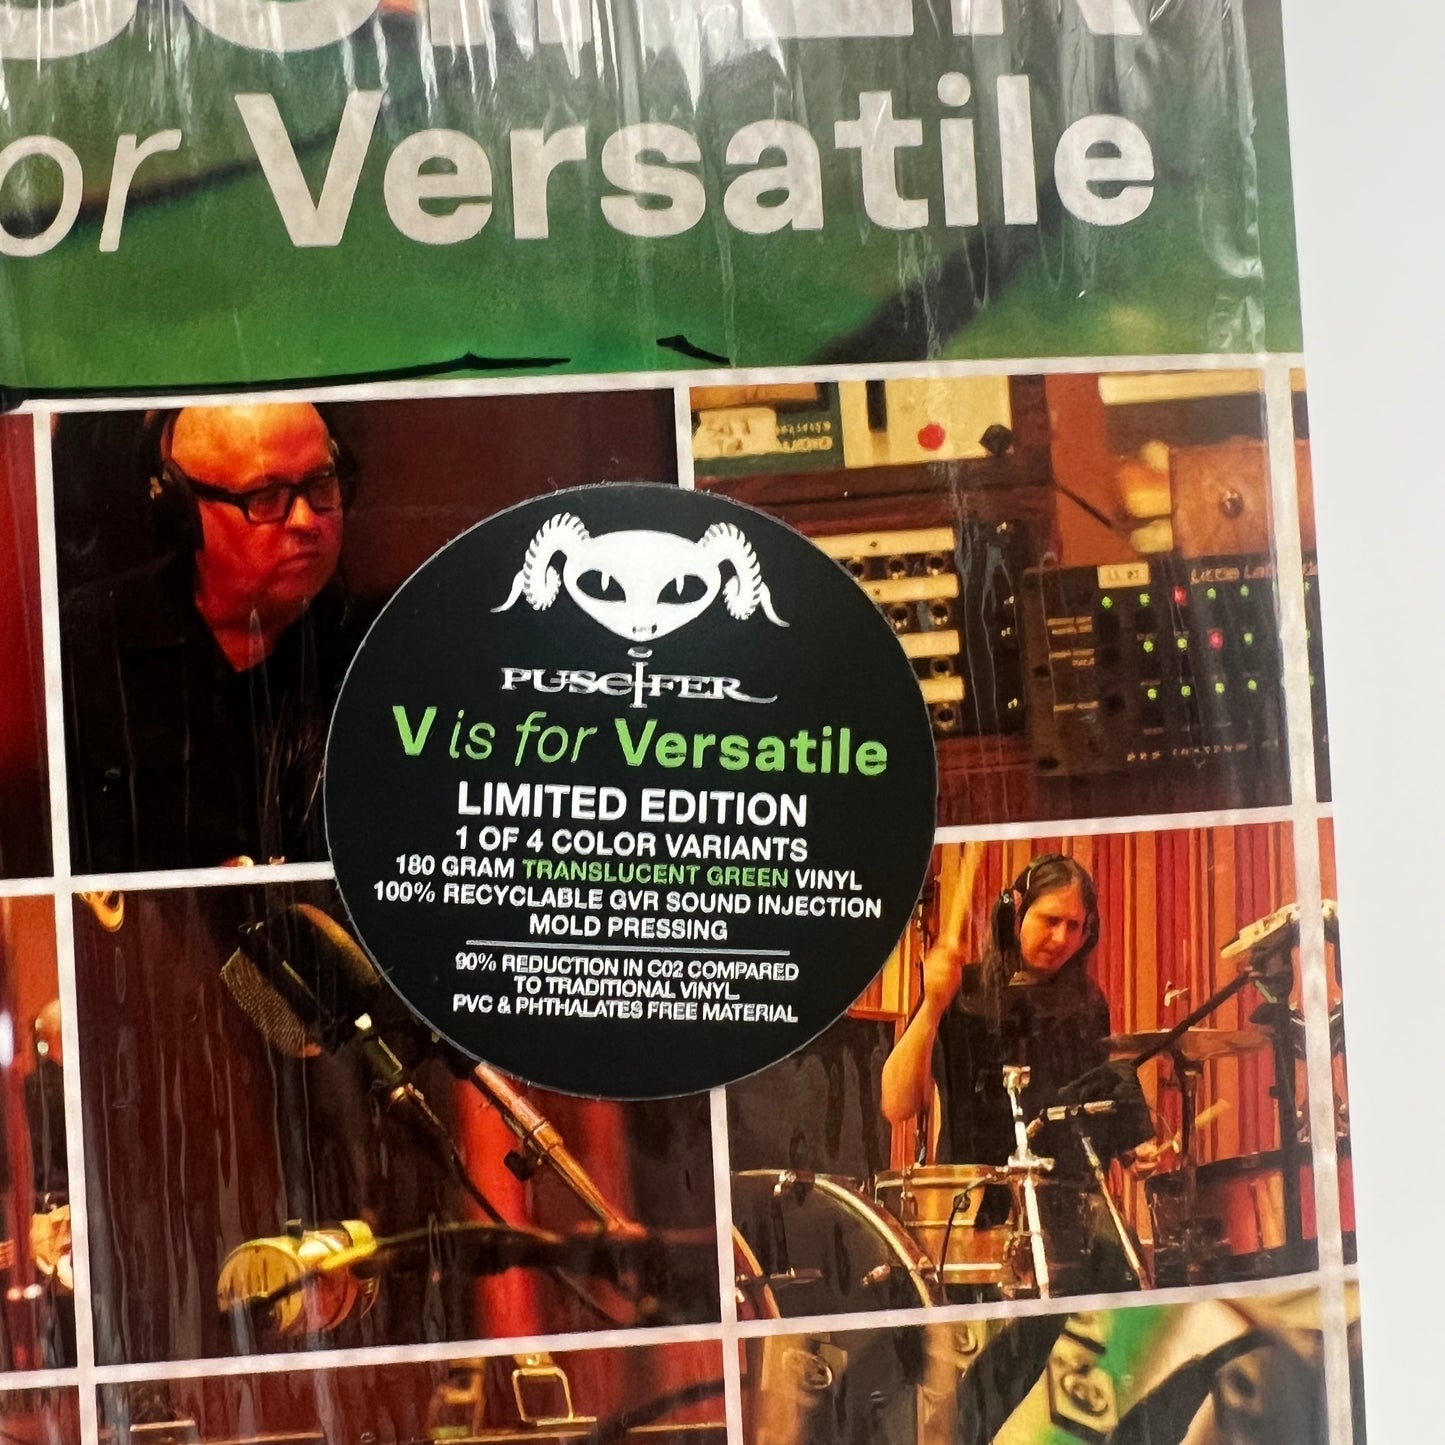 Puscifer - V is for Versatile Vinyl LP Green Translucent Signed by Carina